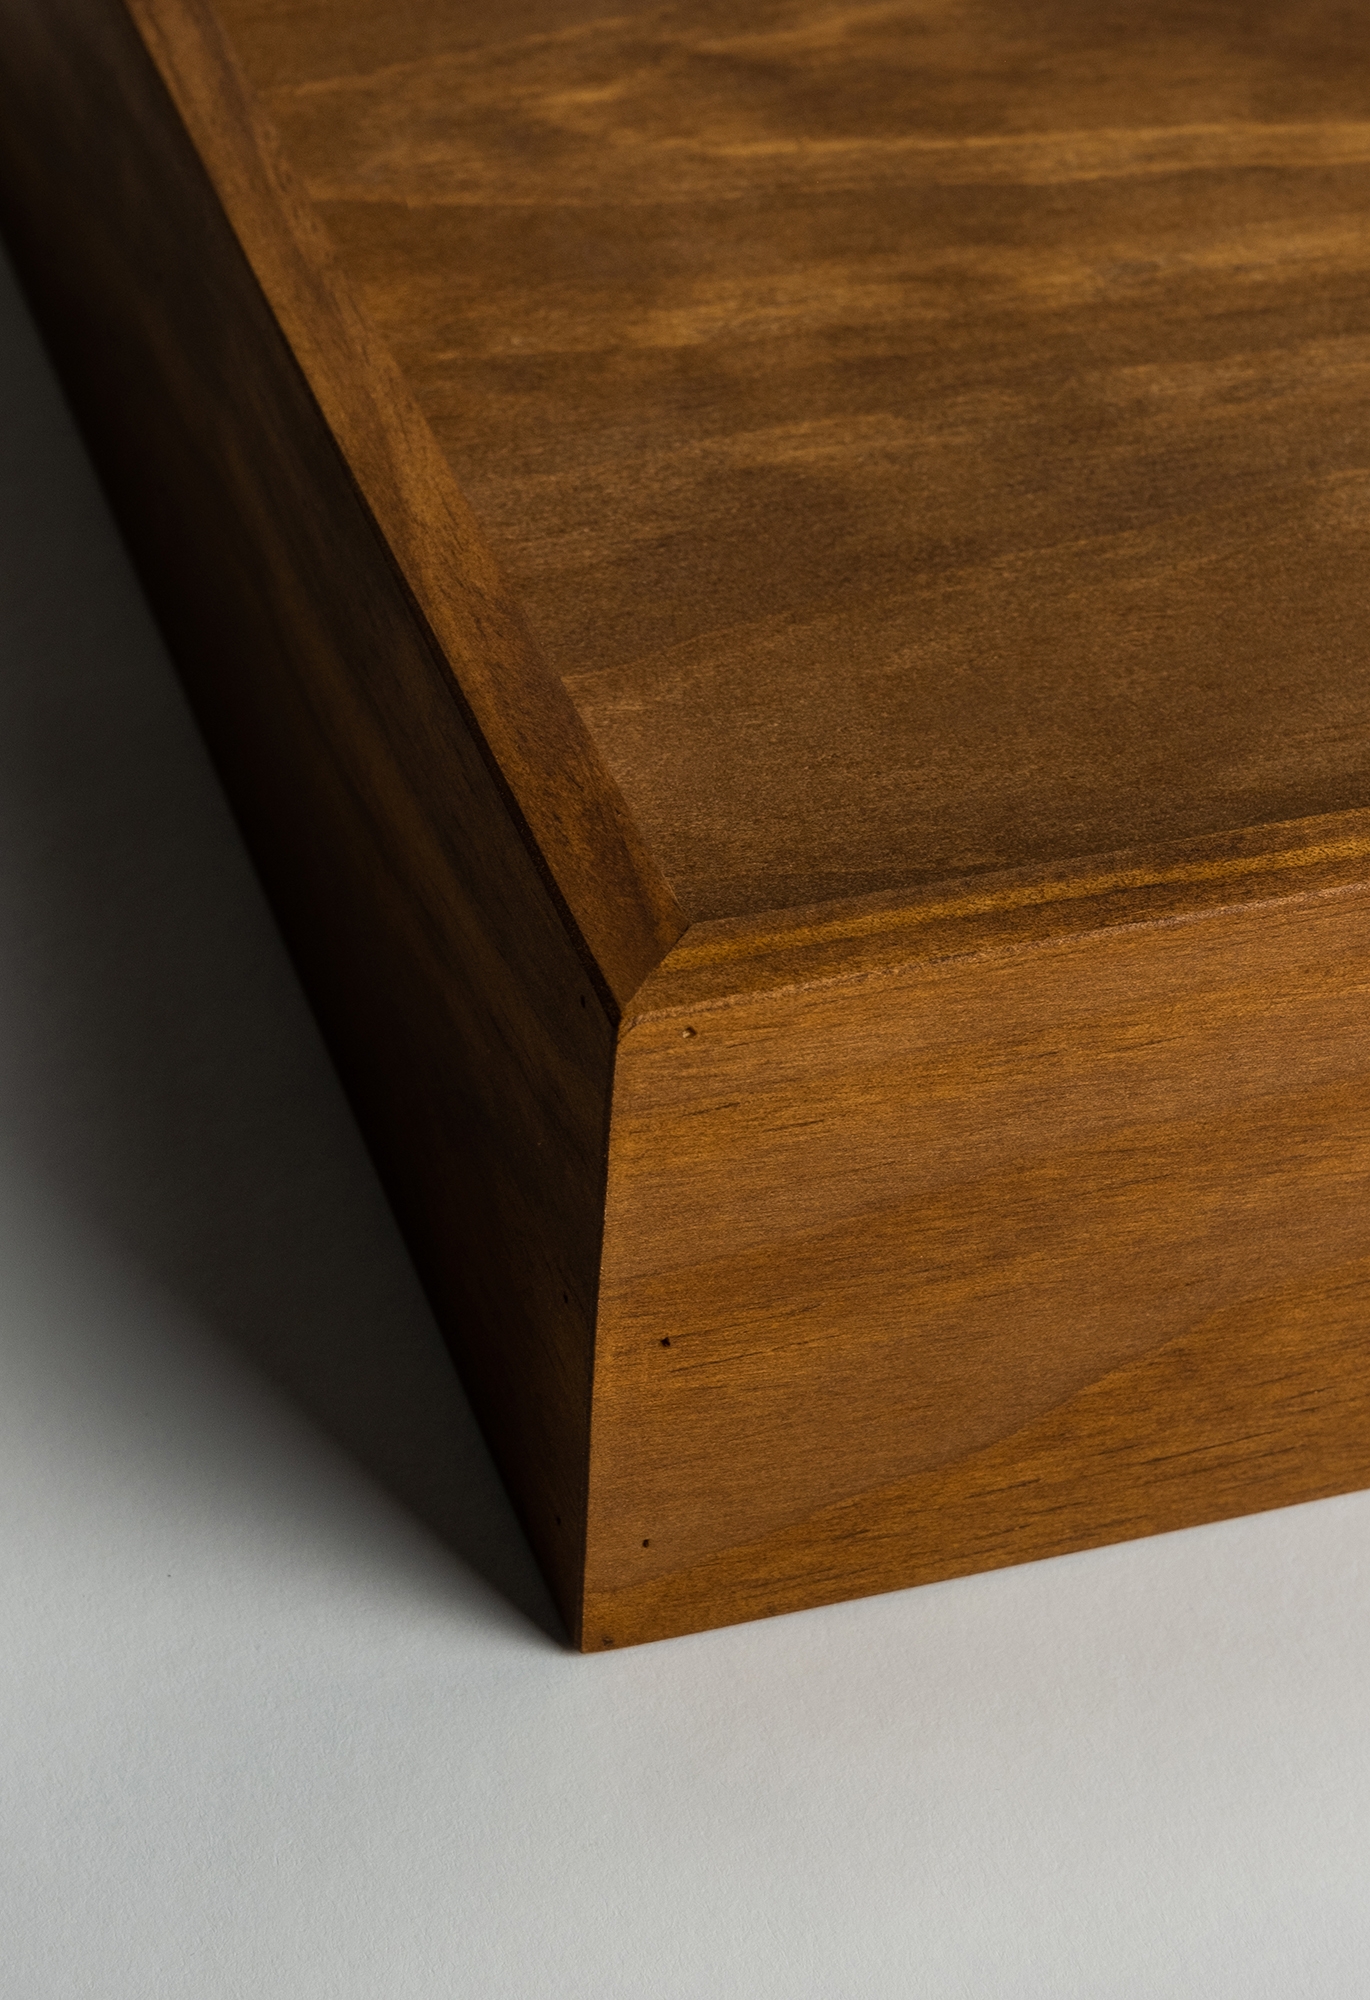 Wood Combo Box Konstruktive Details 1